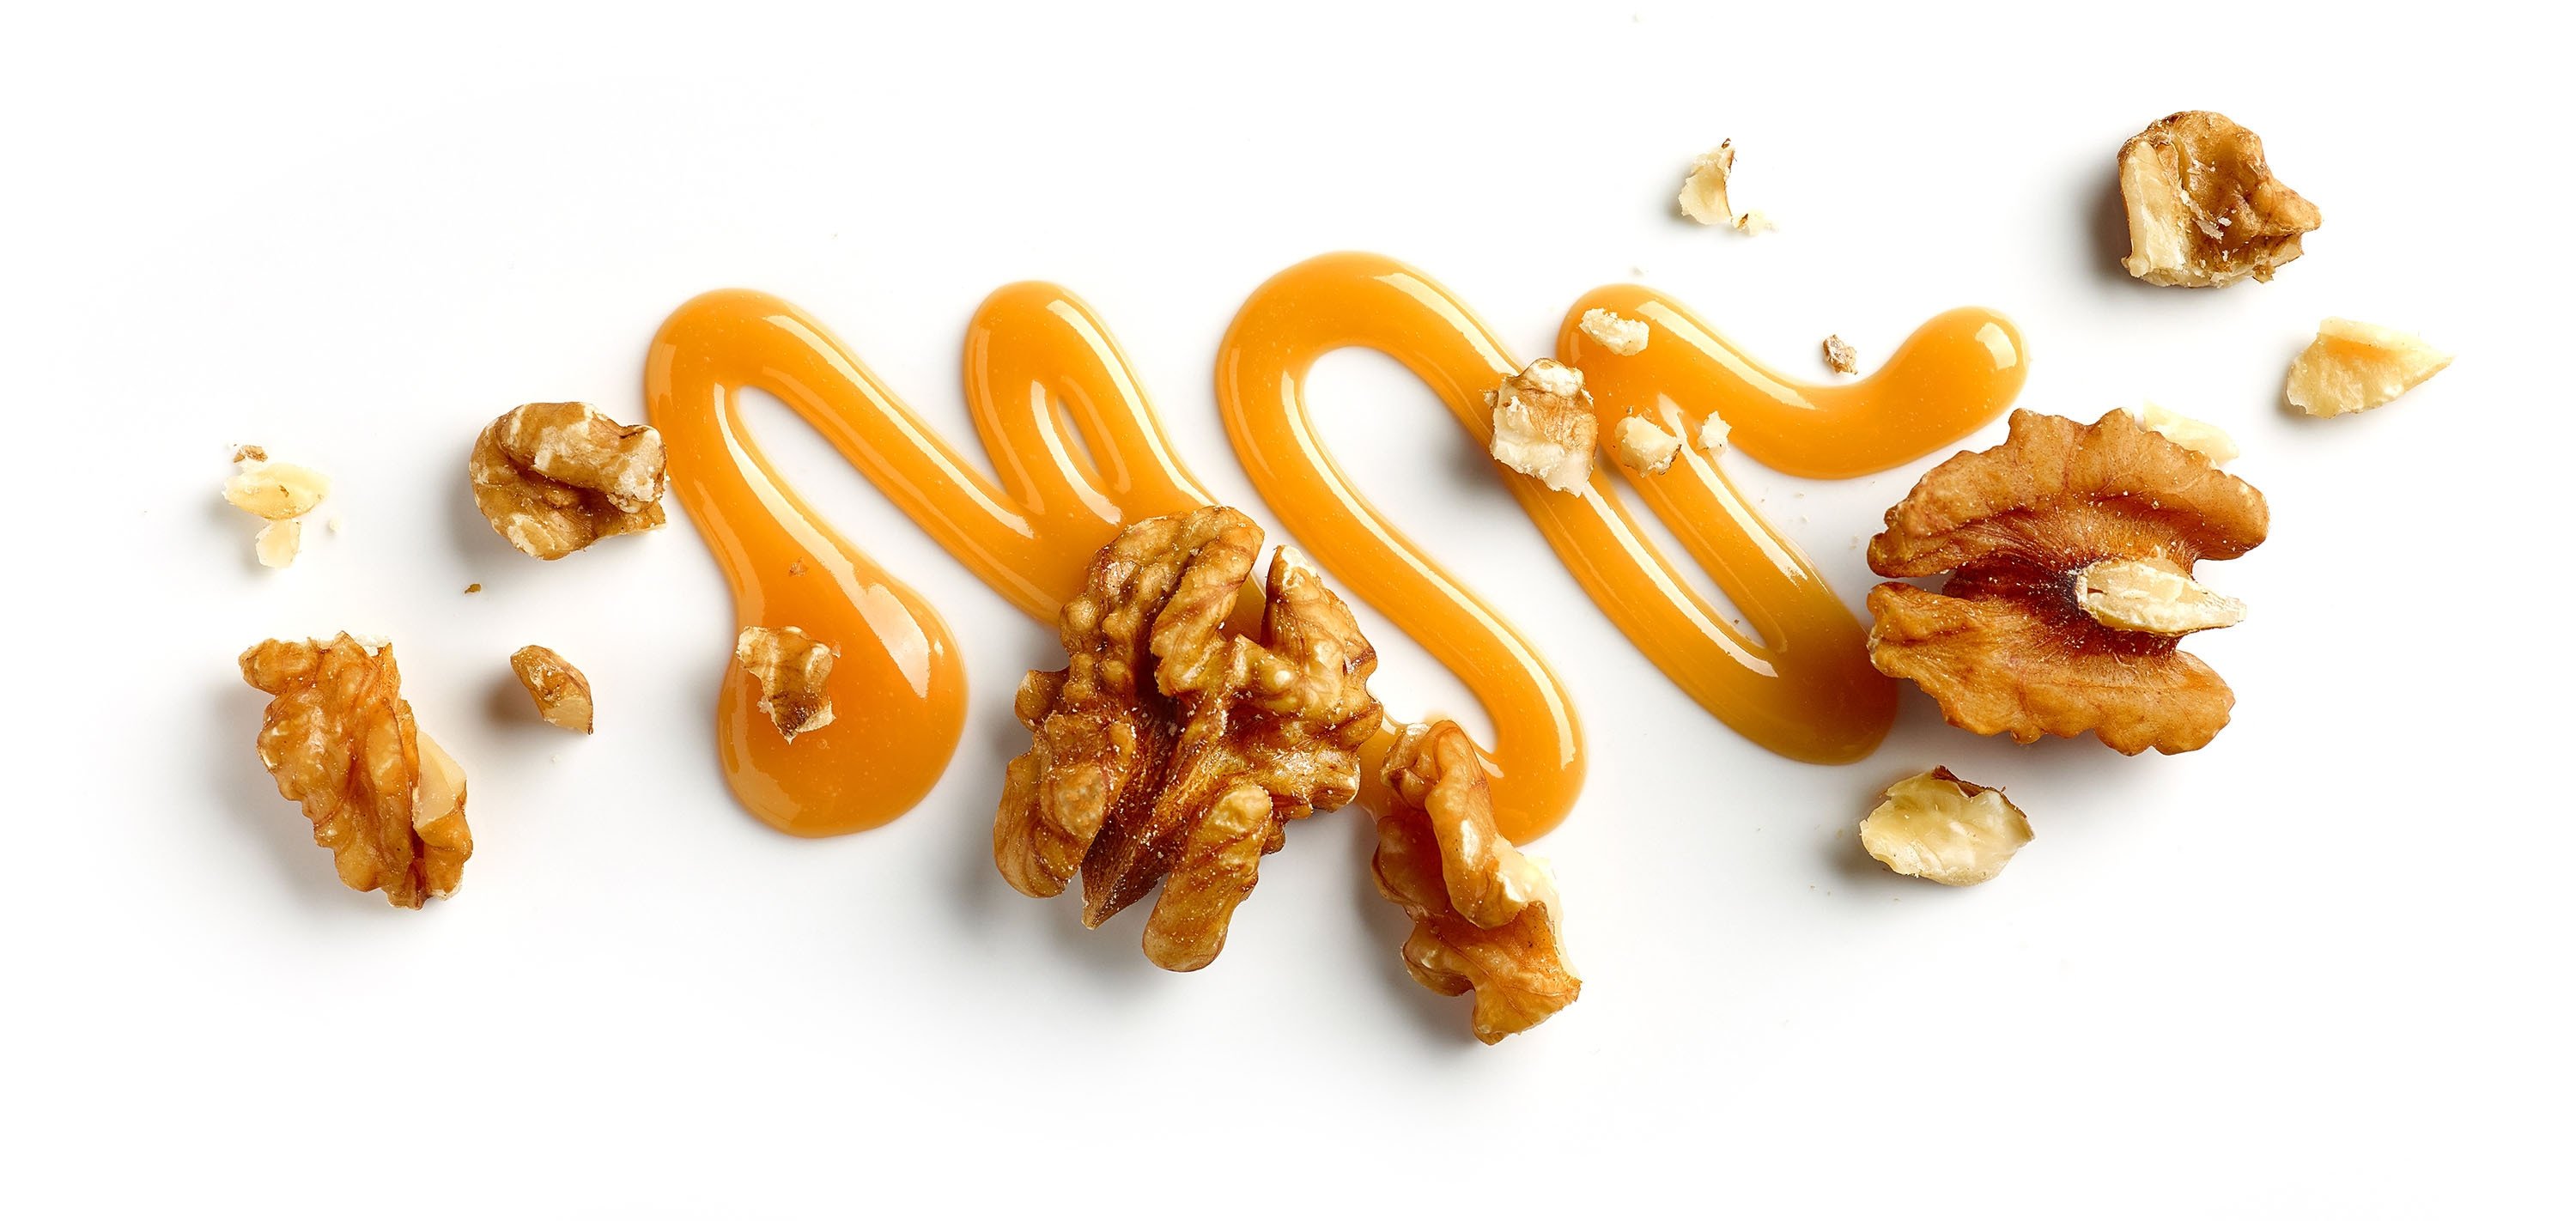 Caramel sauce sprinkled among walnuts. (Shutterstock Photo)